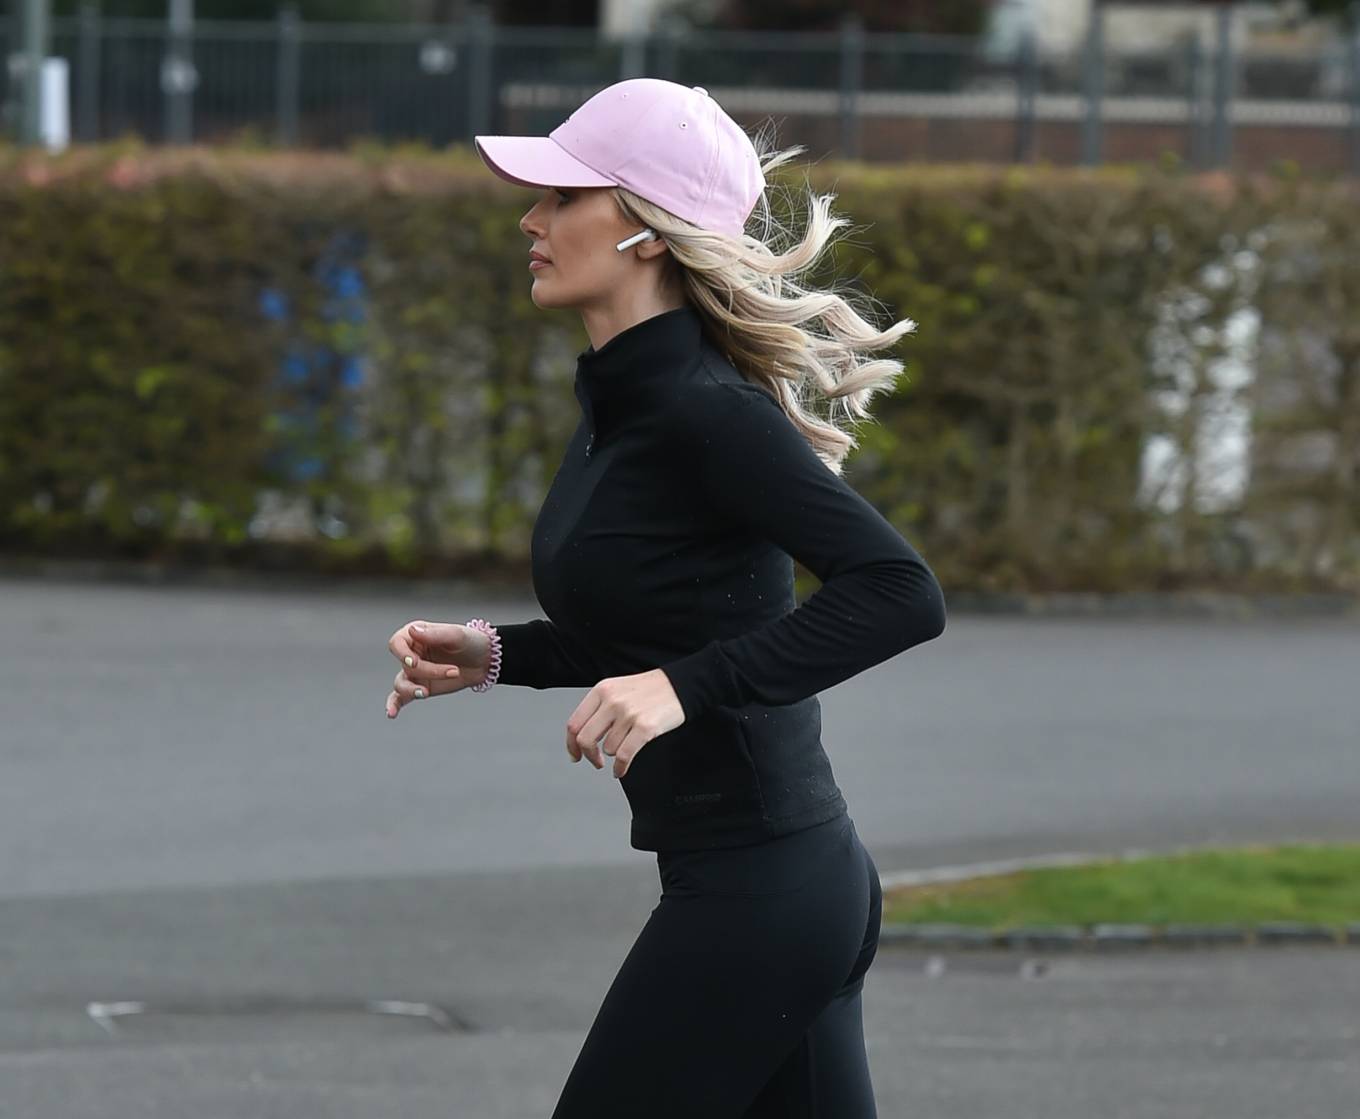 Laura Anderson â€“ Jogging during coronavirus lockdown